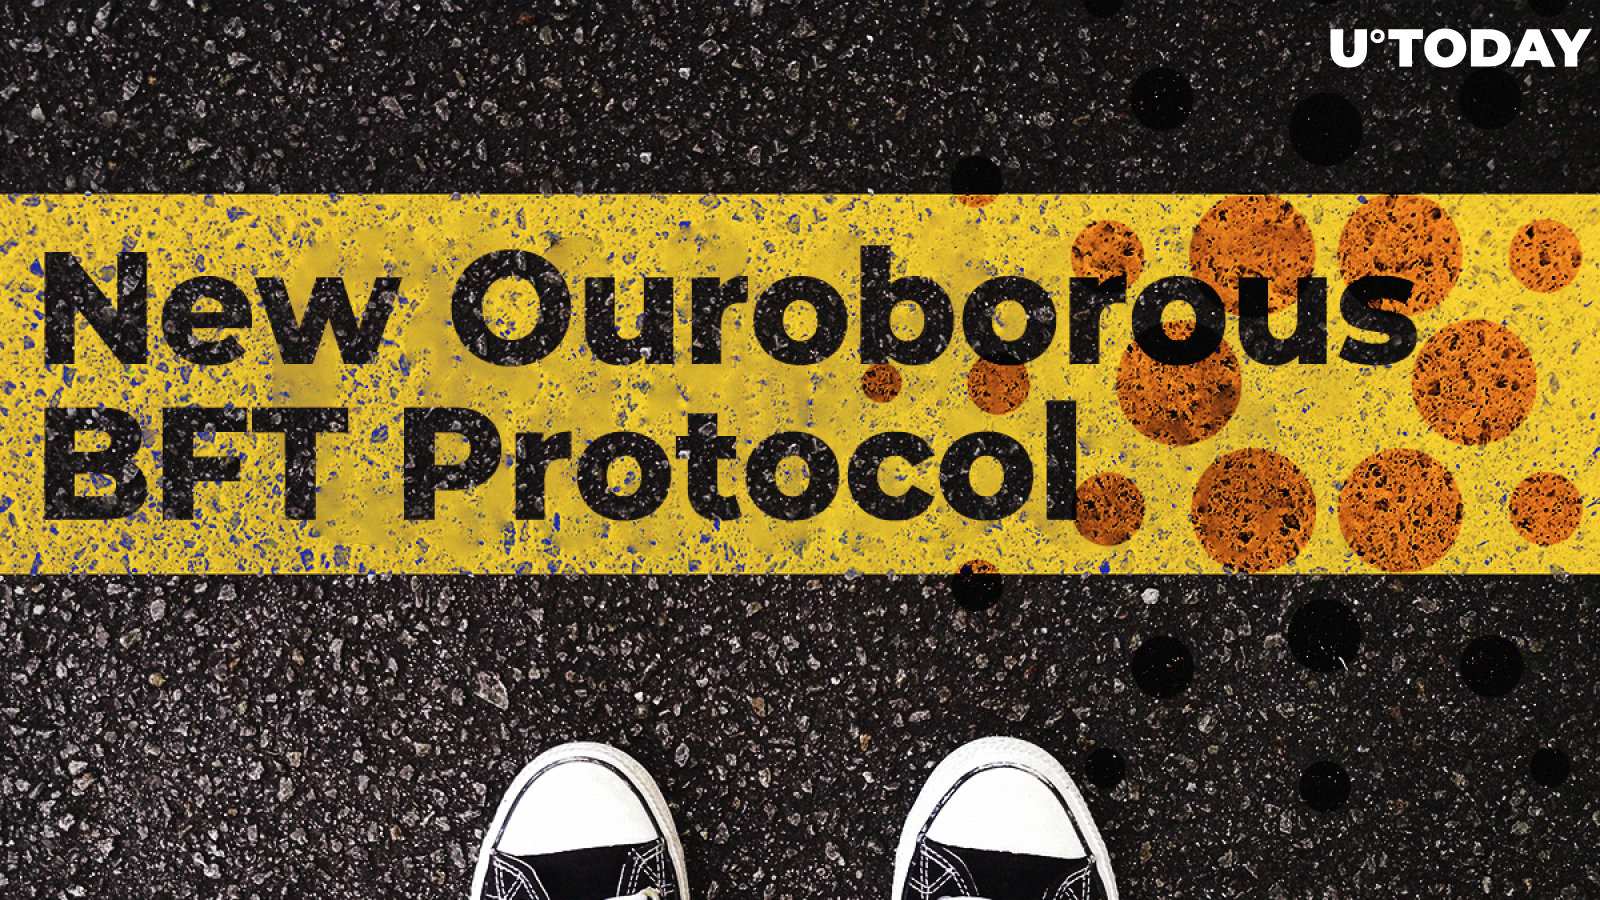 Cardano ADA to Release New Ouroborous BFT Protocol, Hardfork Announced